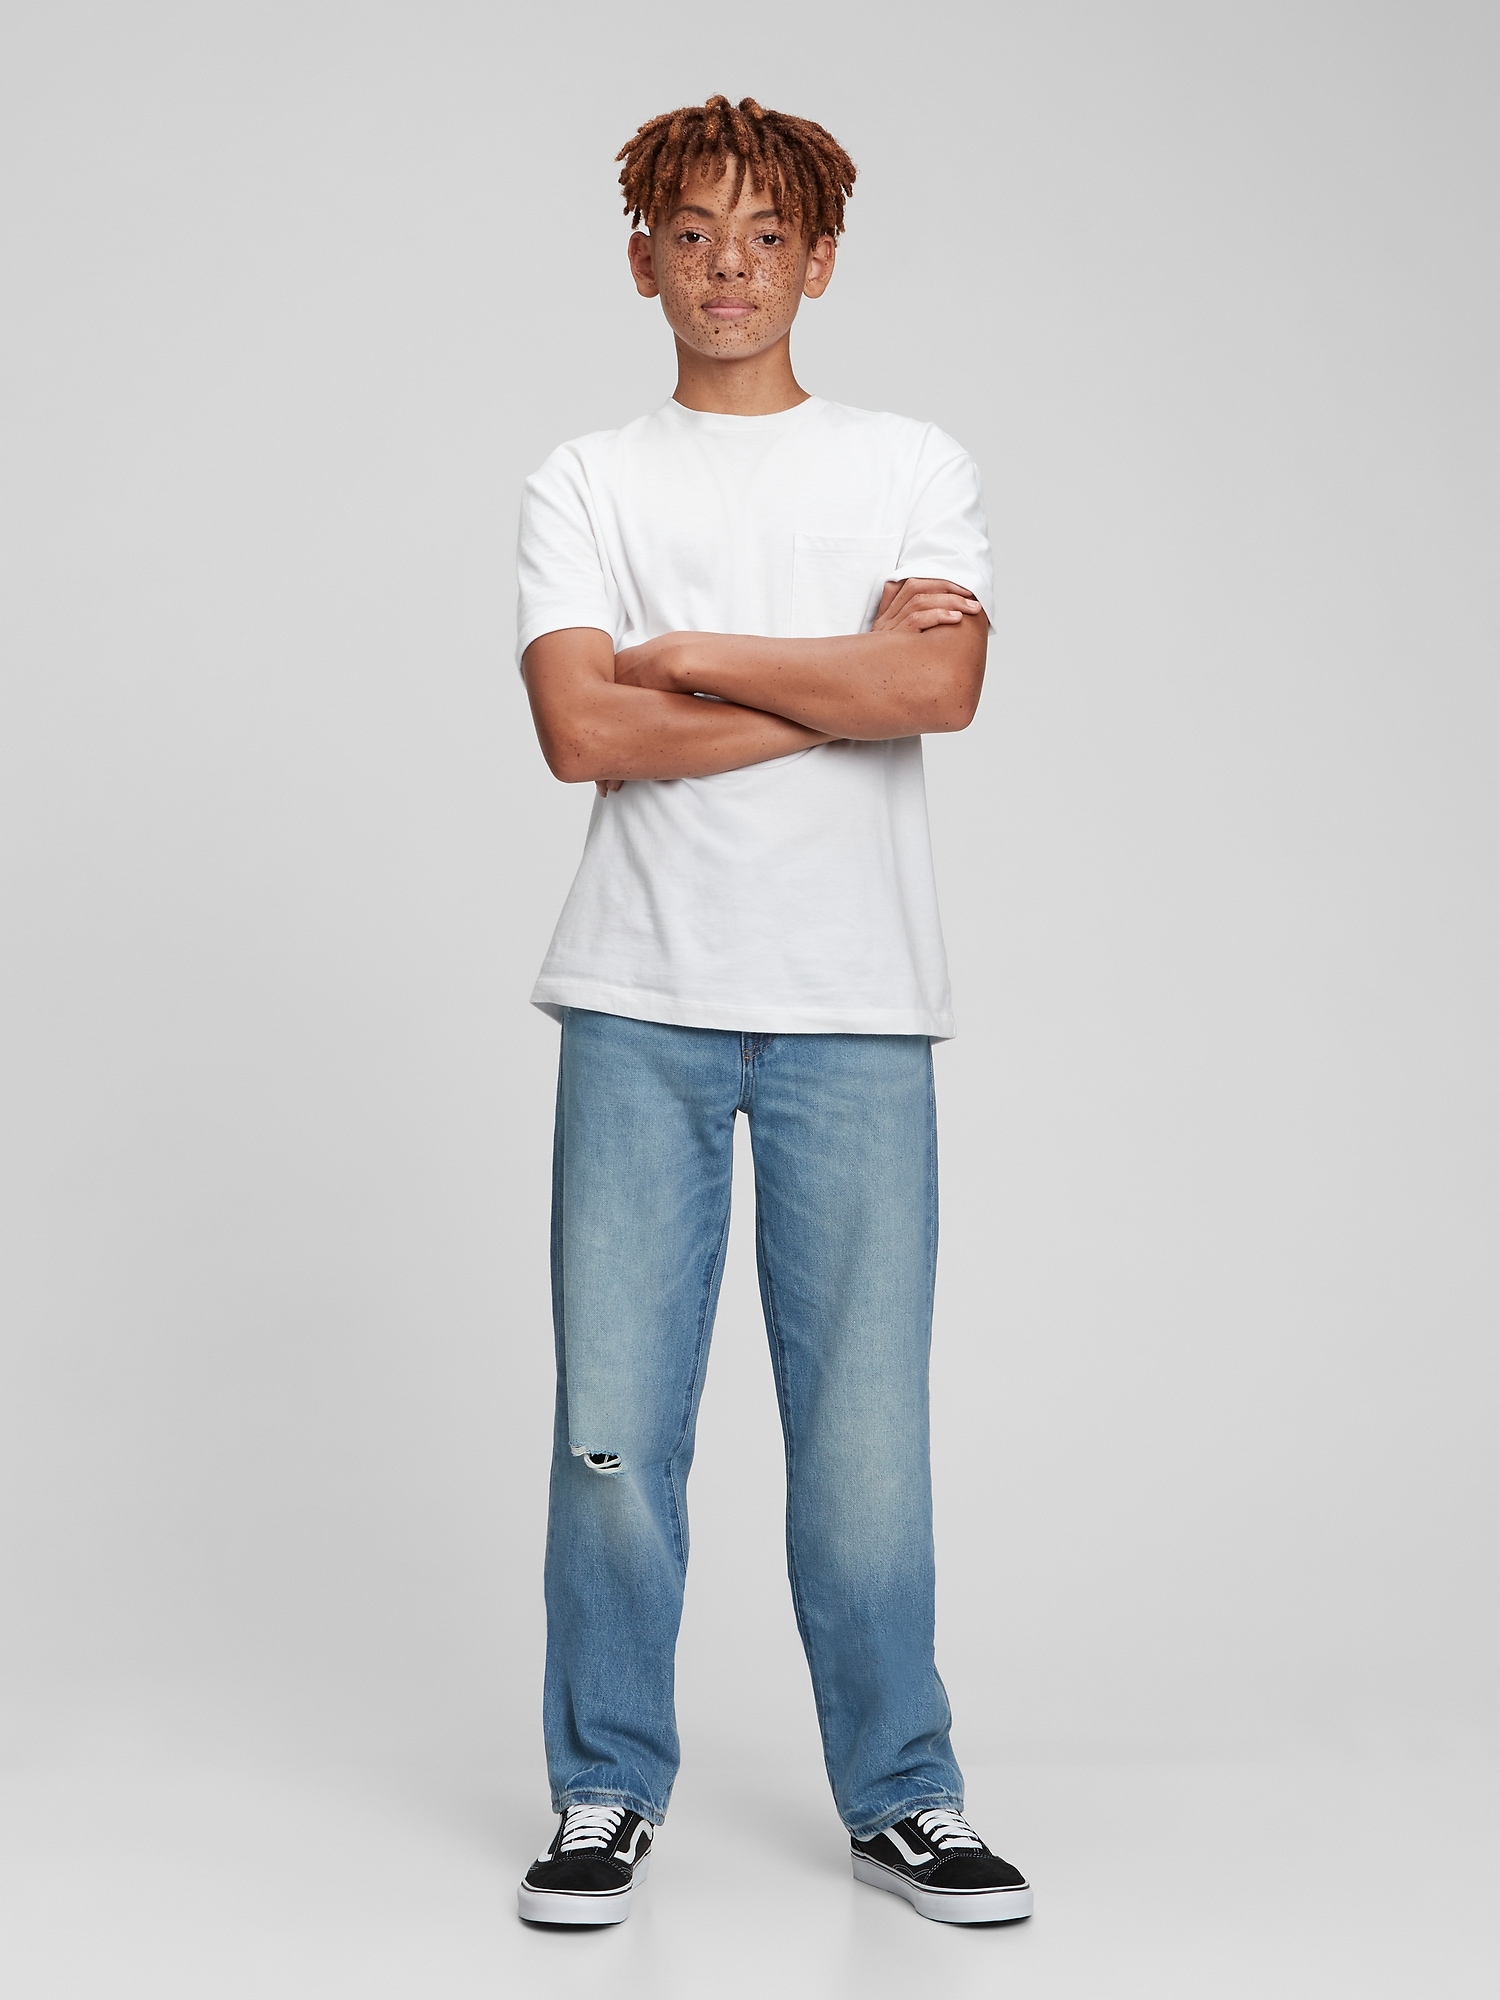 Gap Teen Original Fit Jeans